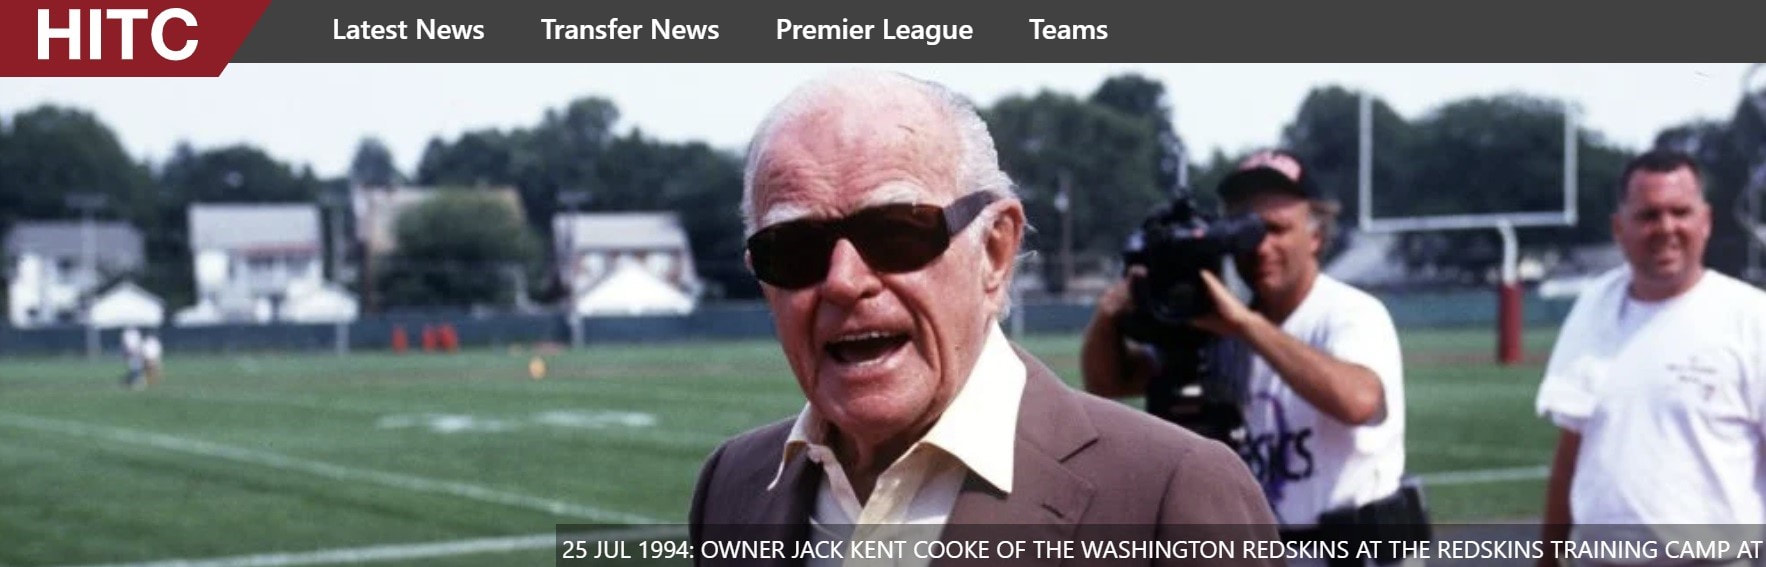 billionaire Jack Kent Cooke